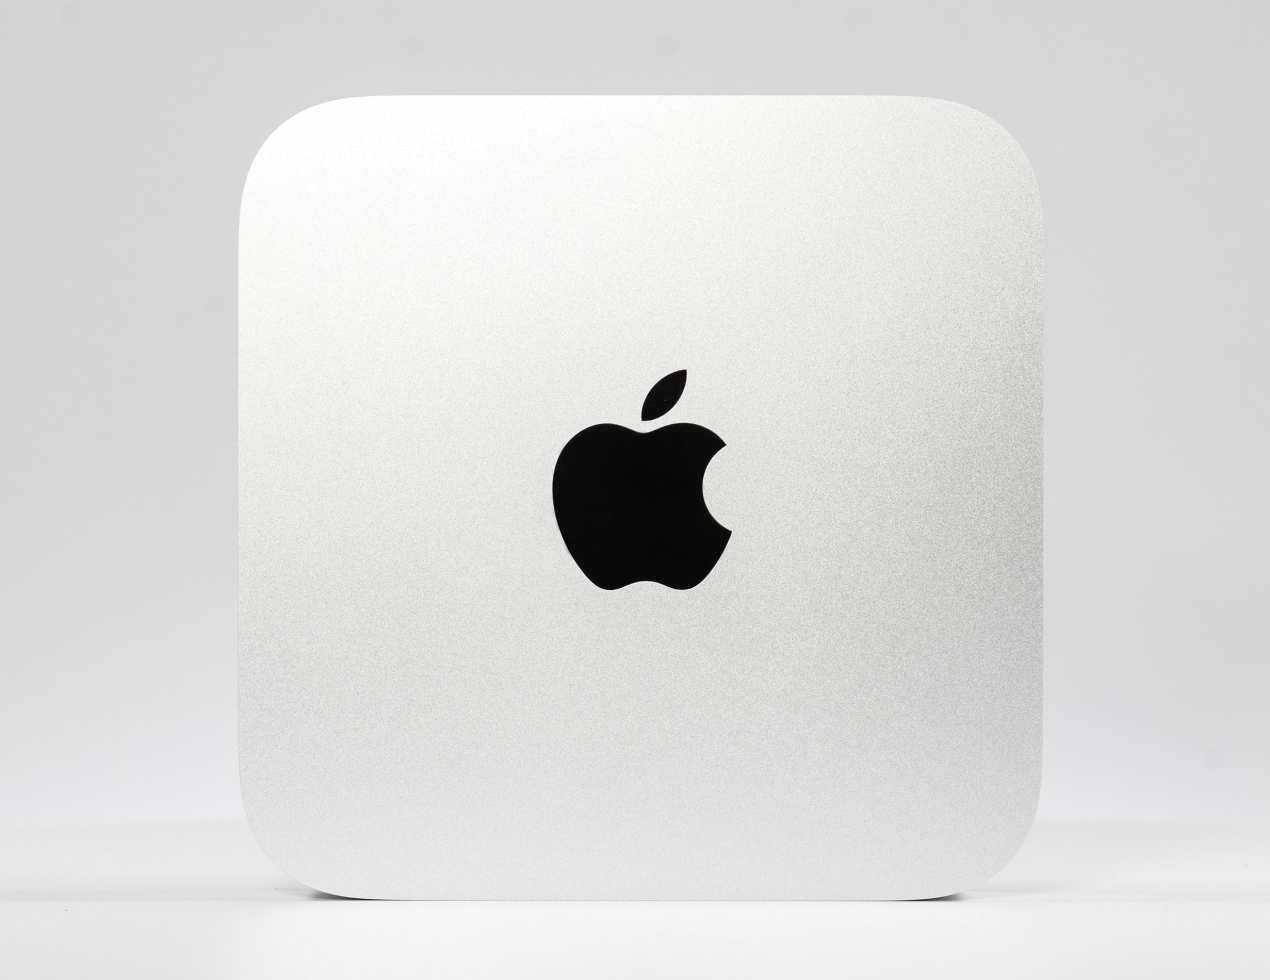 Buy Used & Refurbished 2014 Apple Mac mini 1.4GHz Core I5-4260U 